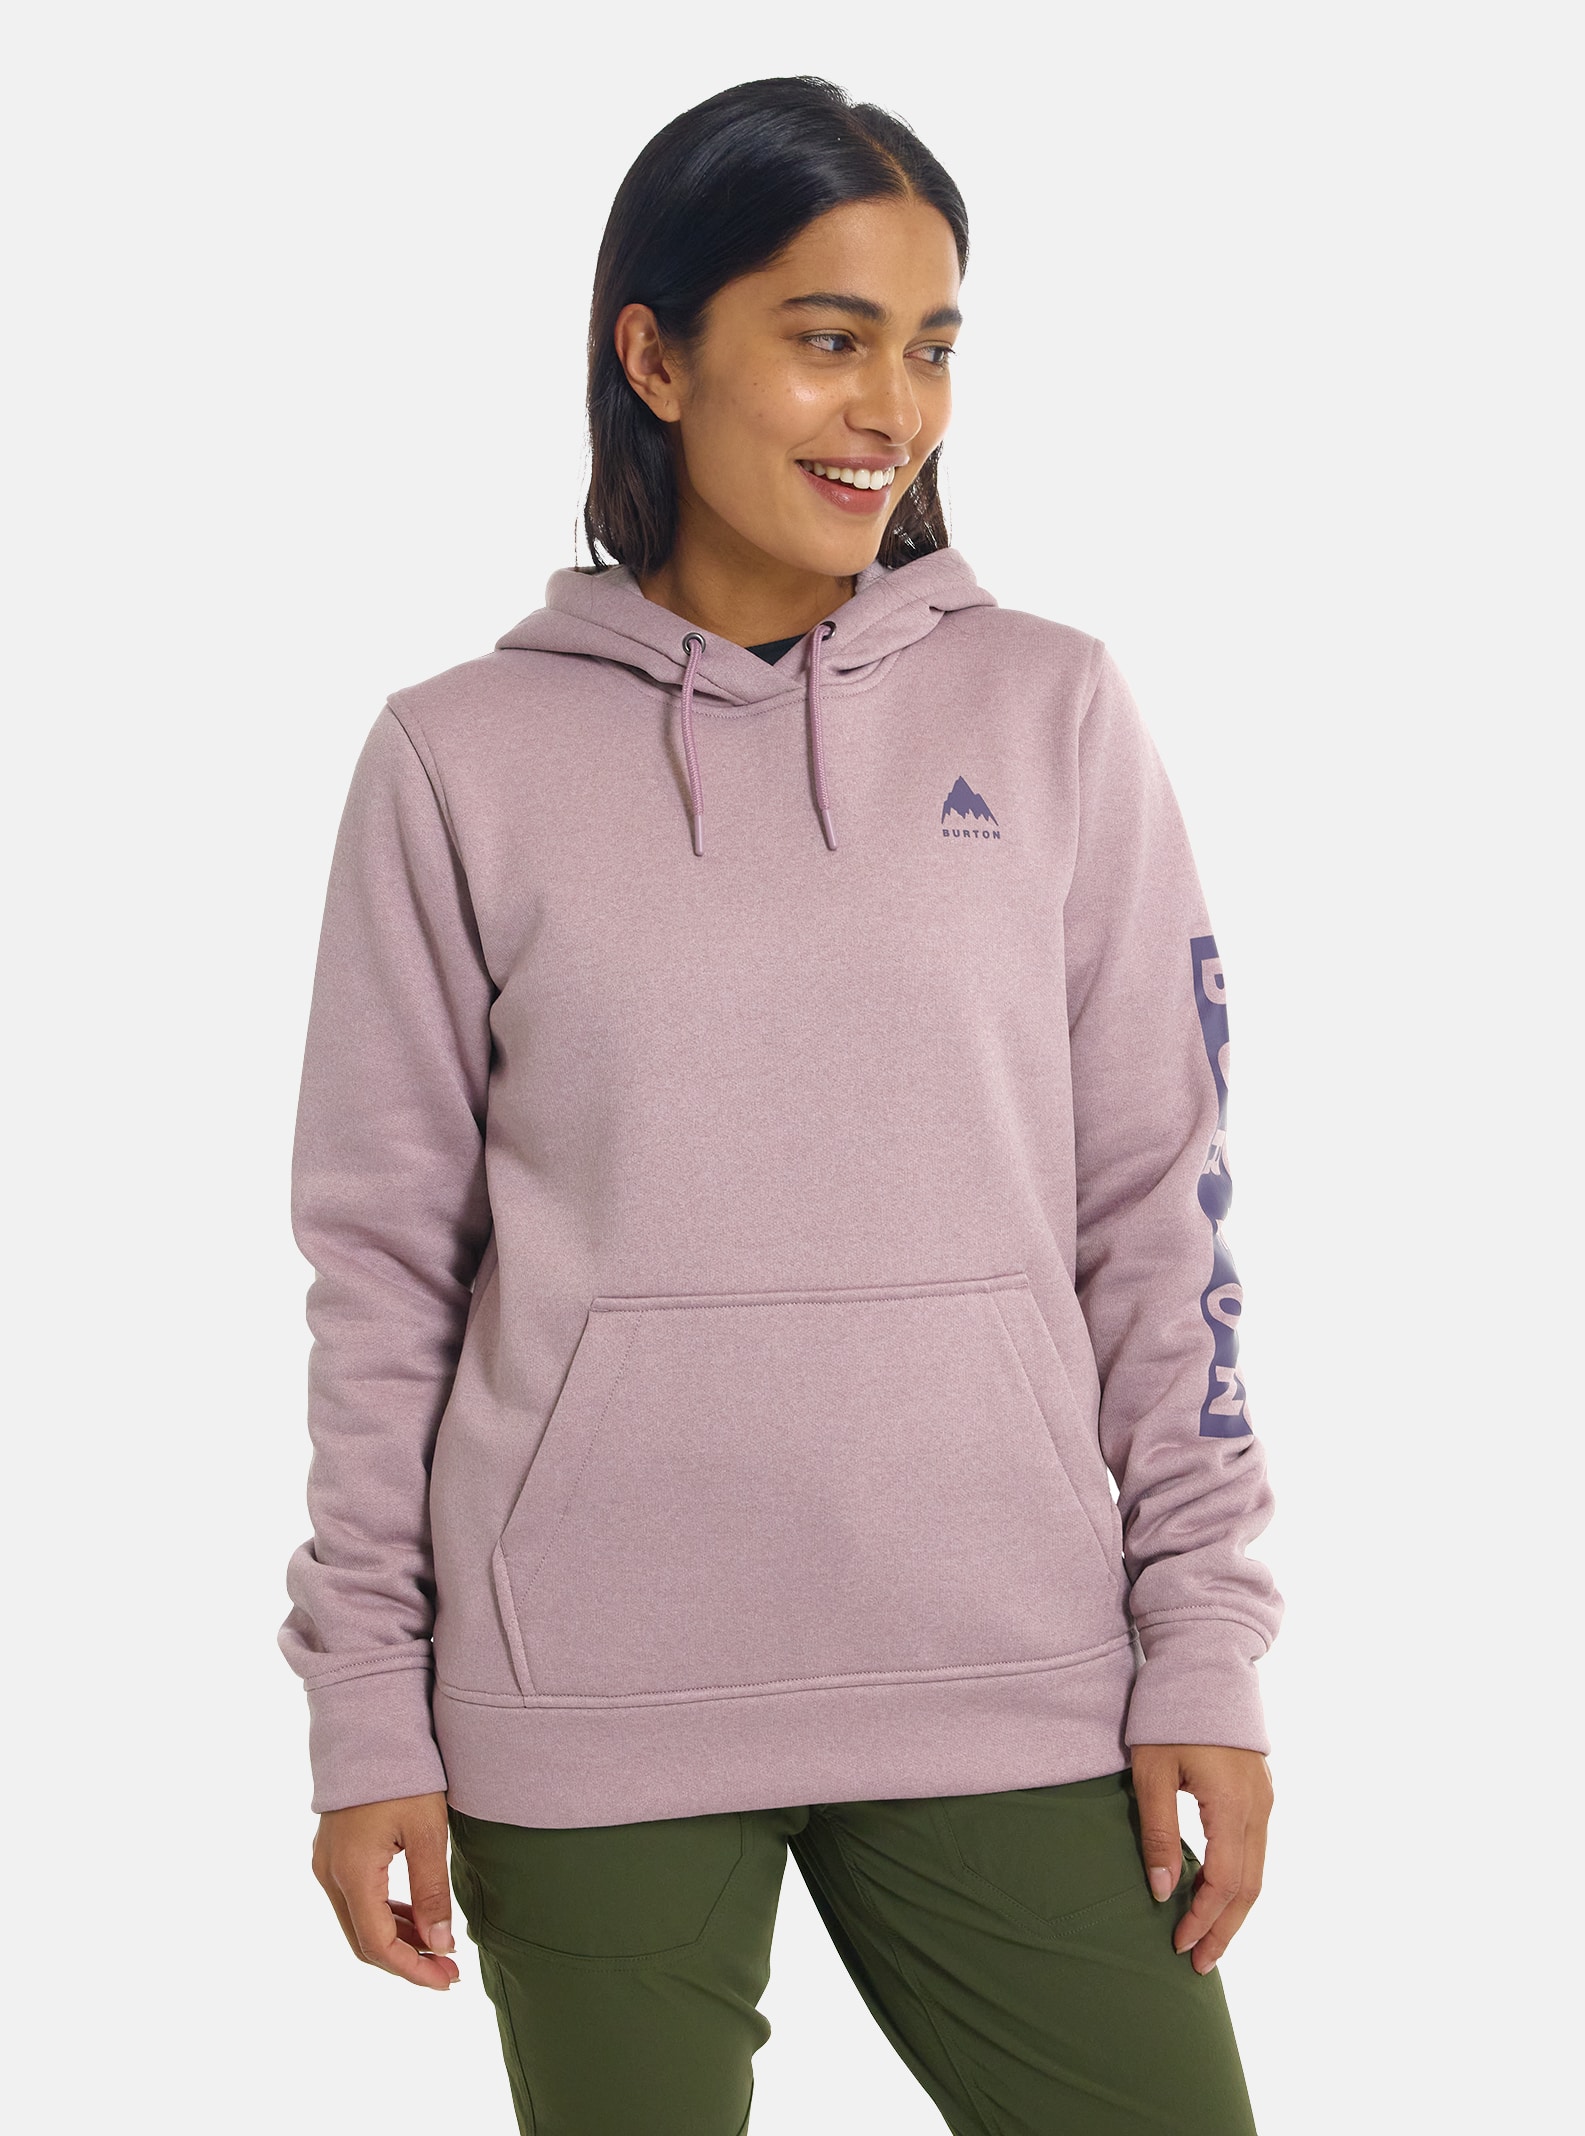 Women's Hoodies & Sweatshirts | Burton Snowboards US